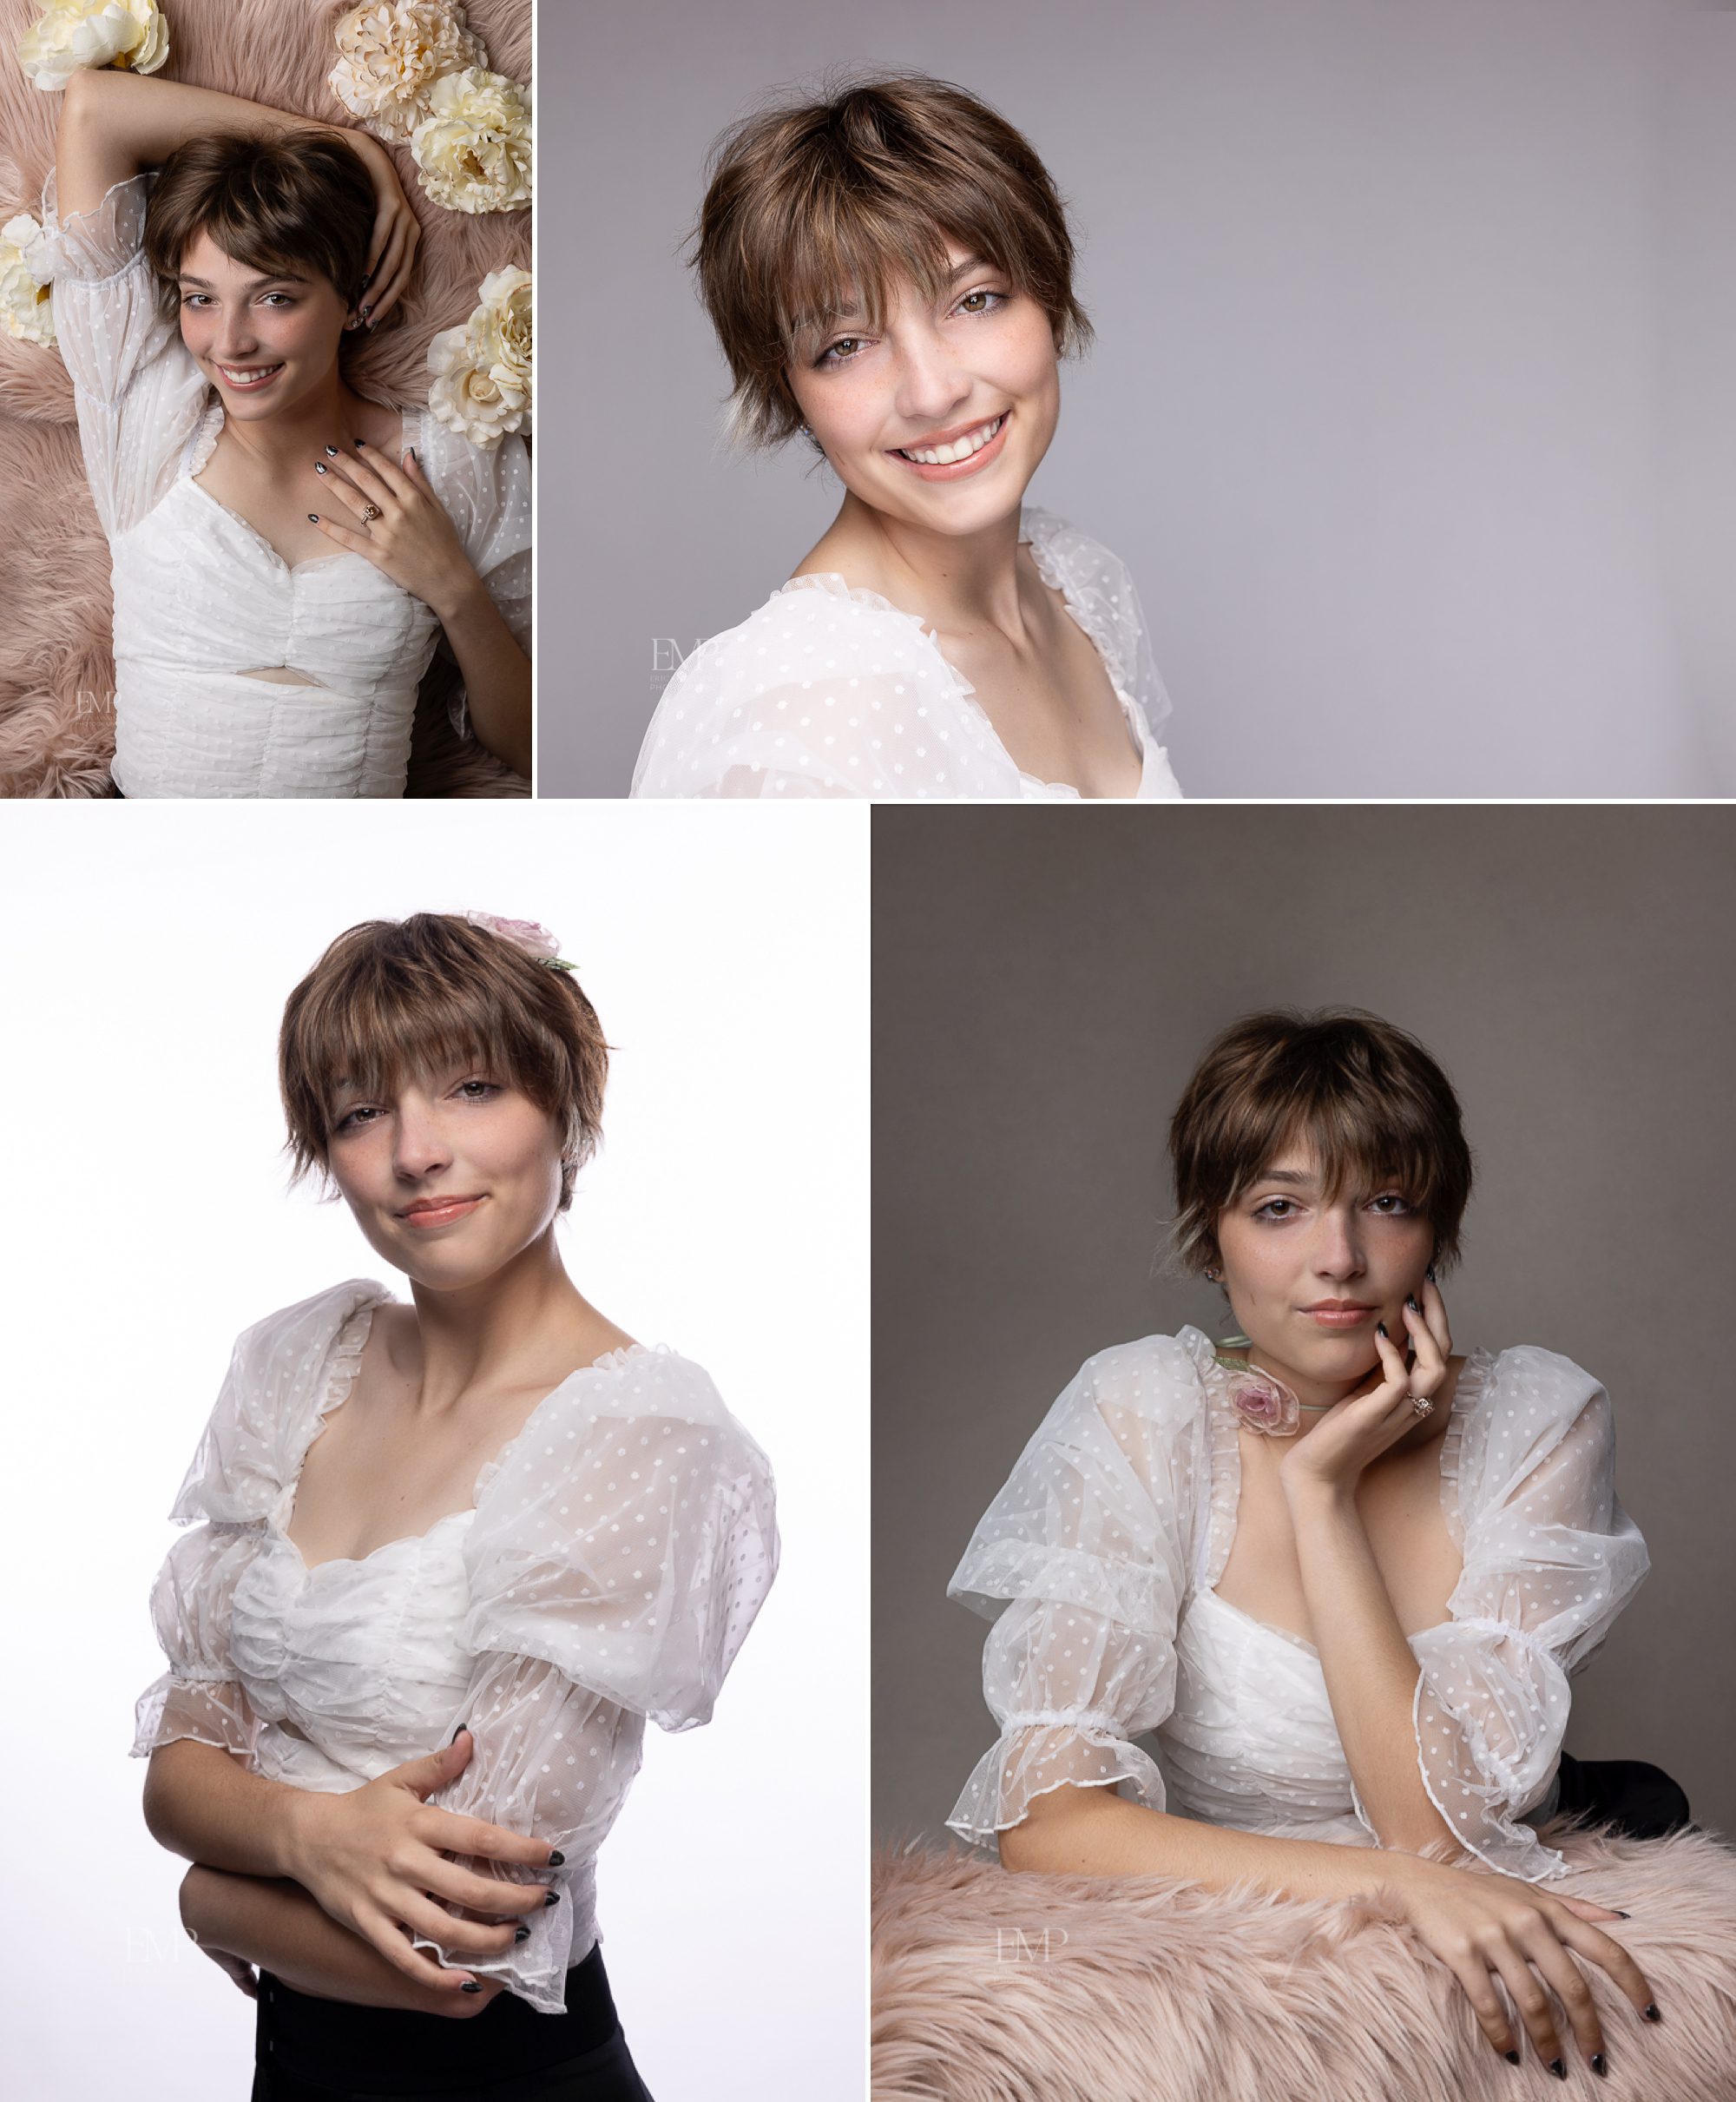 High school senior girl with pixie haricut and white blouse studio photos.